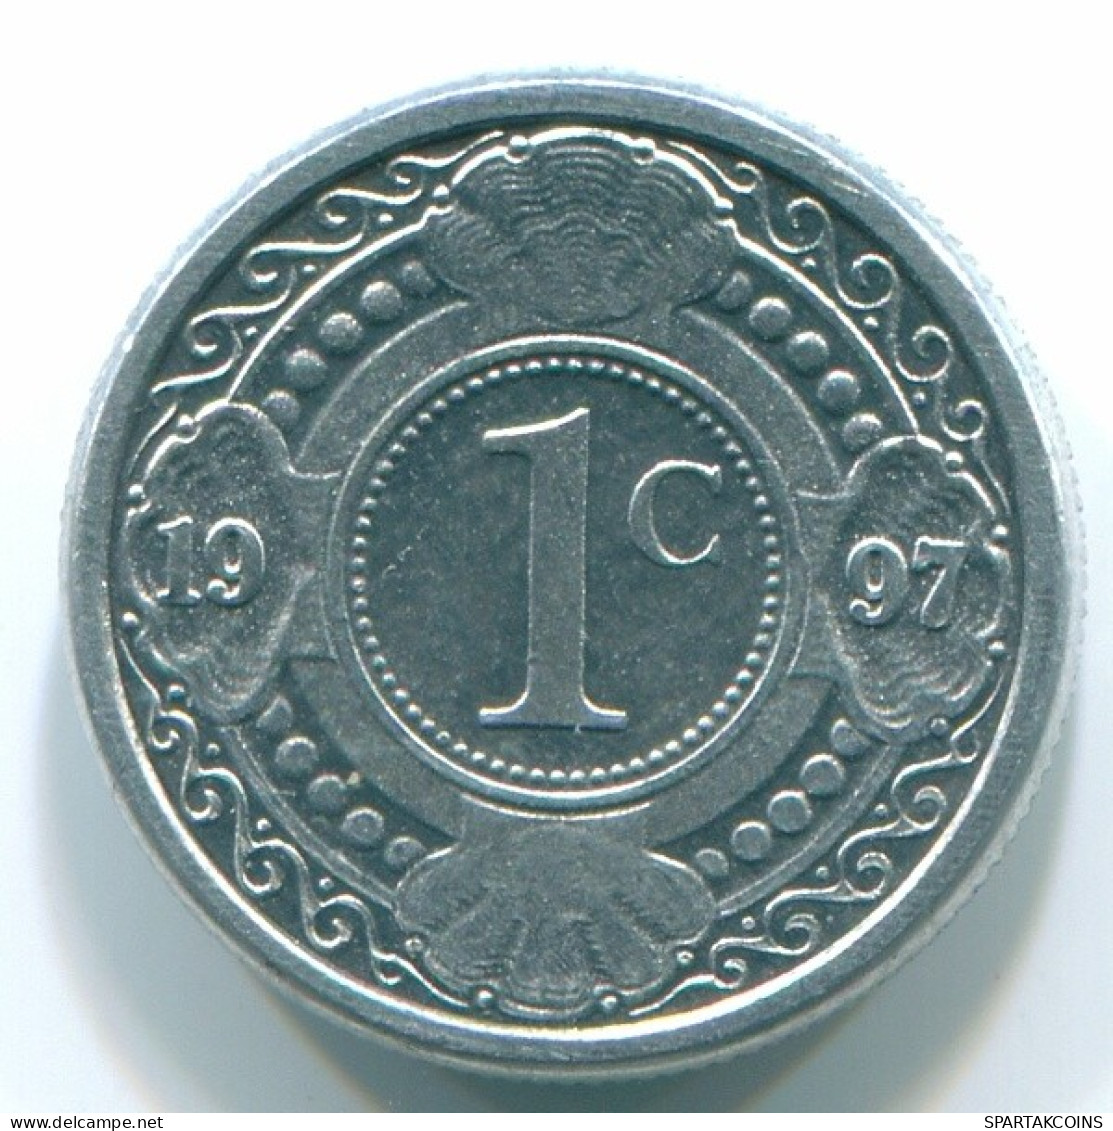 1 CENT 1996 NETHERLANDS ANTILLES Aluminium Colonial Coin #S13147.U.A - Antillas Neerlandesas